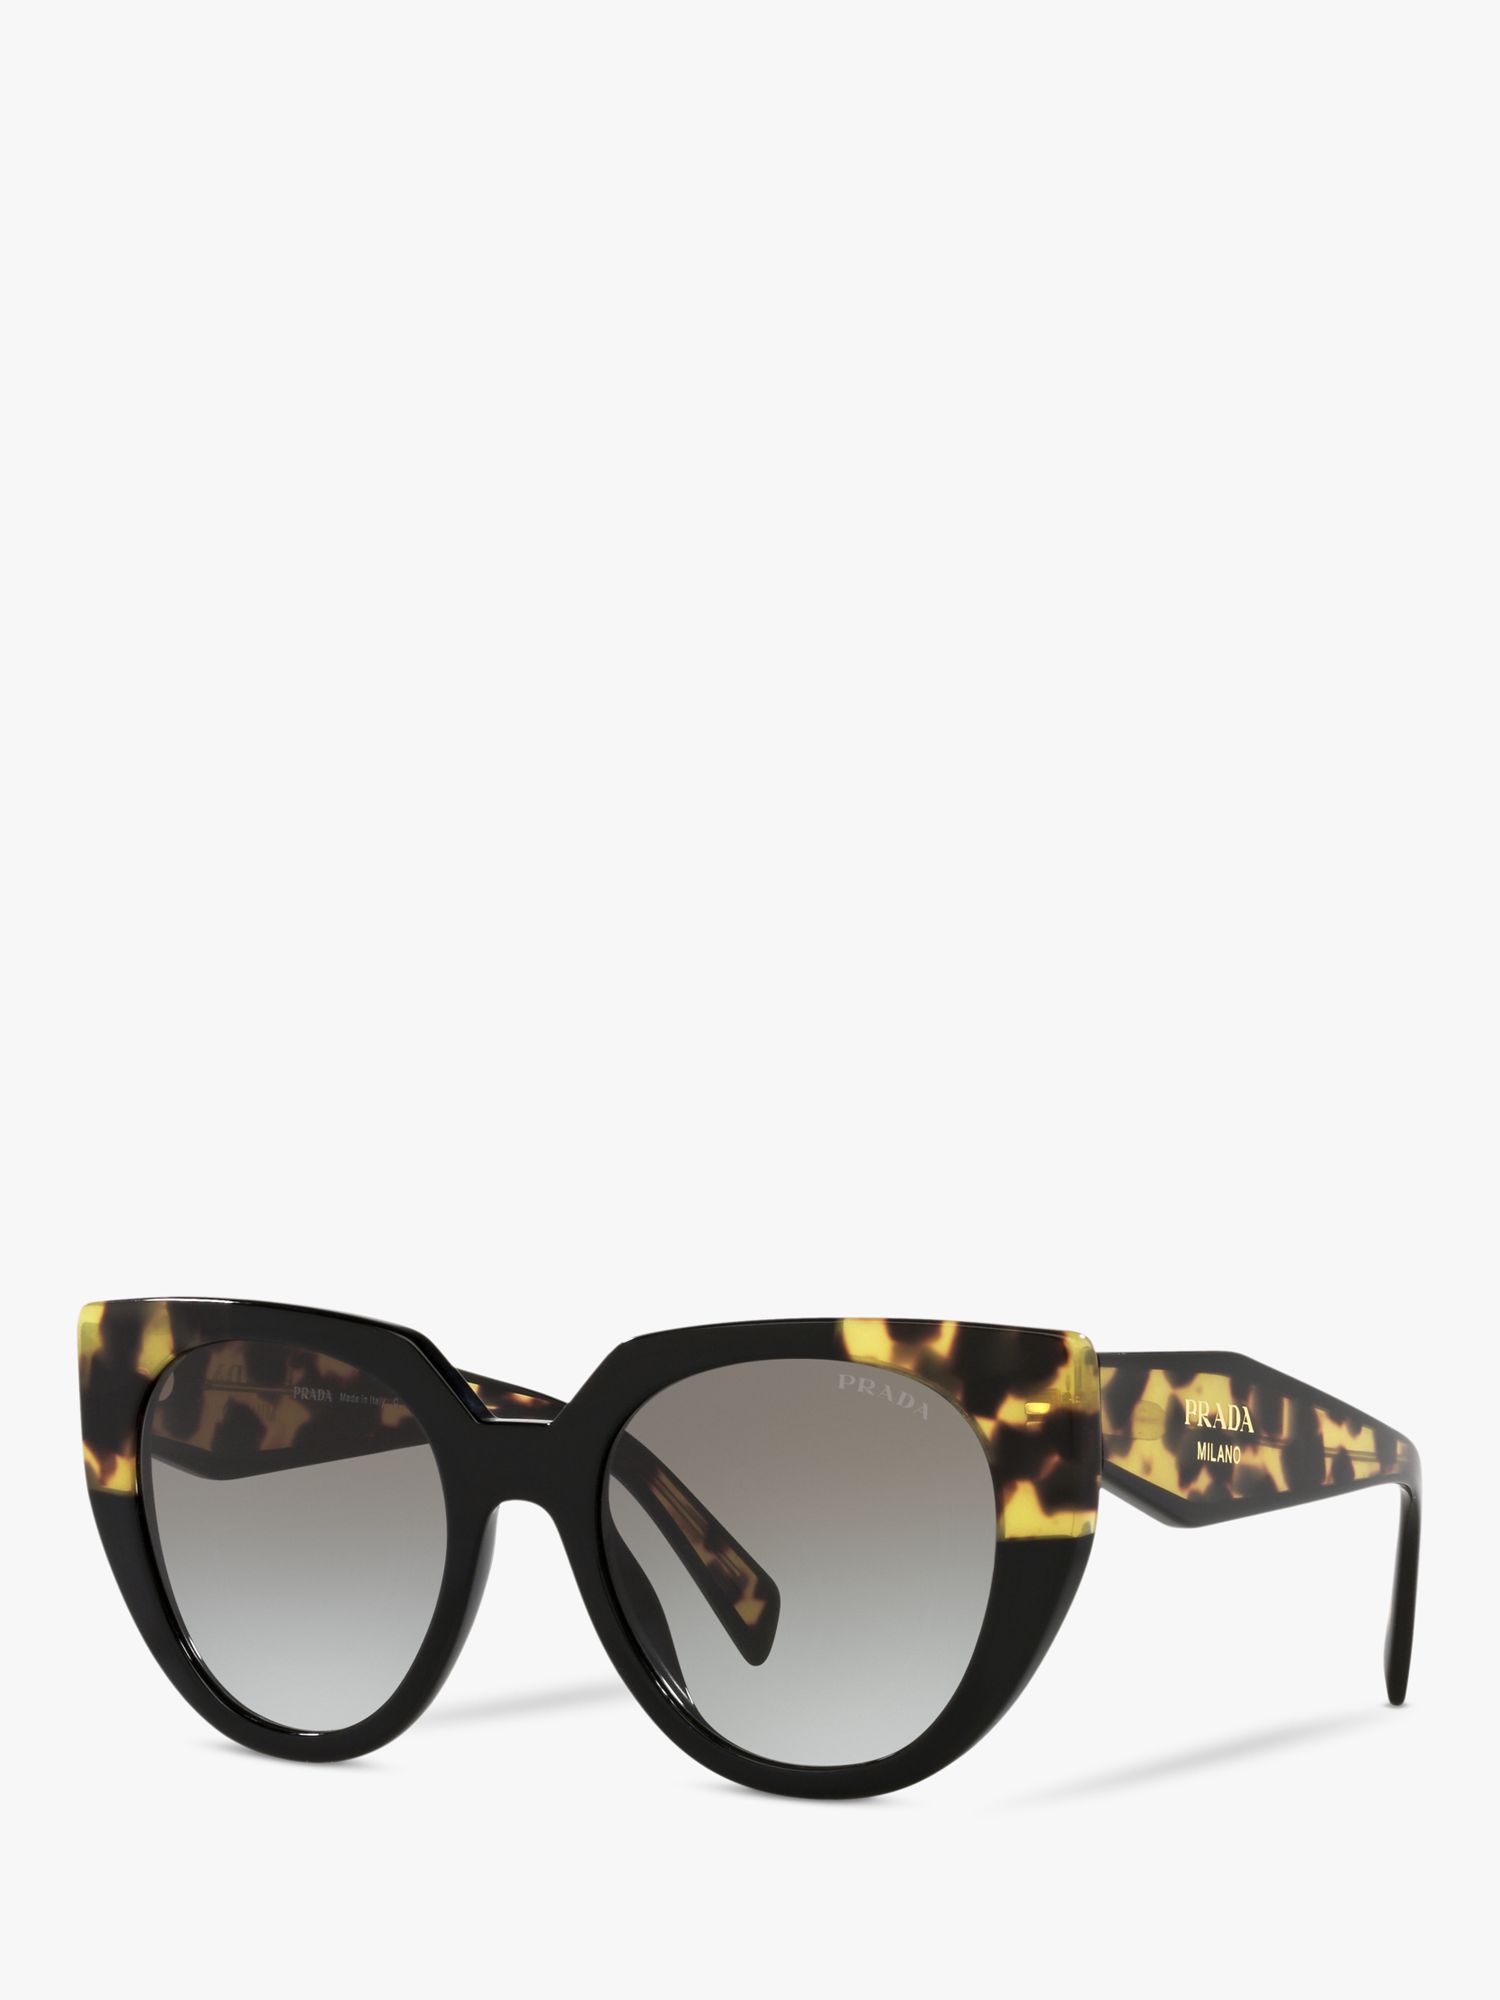 Prada PR 14WS Women's Cat's Eye Sunglasses, Black Medium Tortoise/Grey Gradient